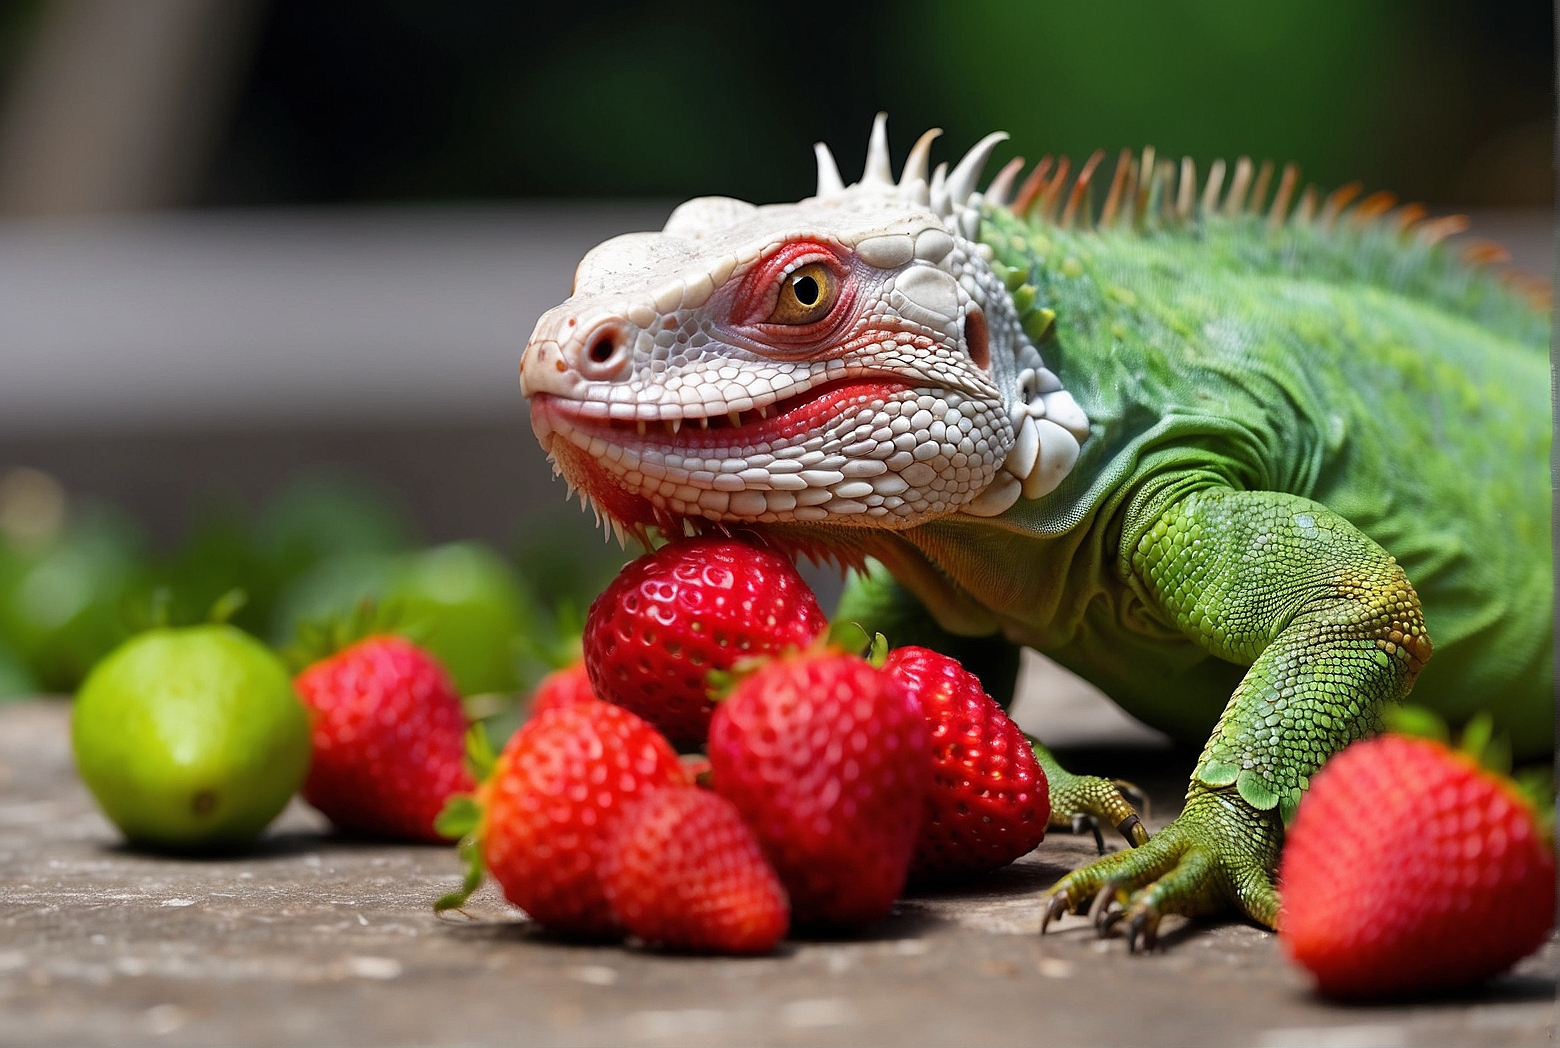 Can Green Iguanas Eat Strawberries?